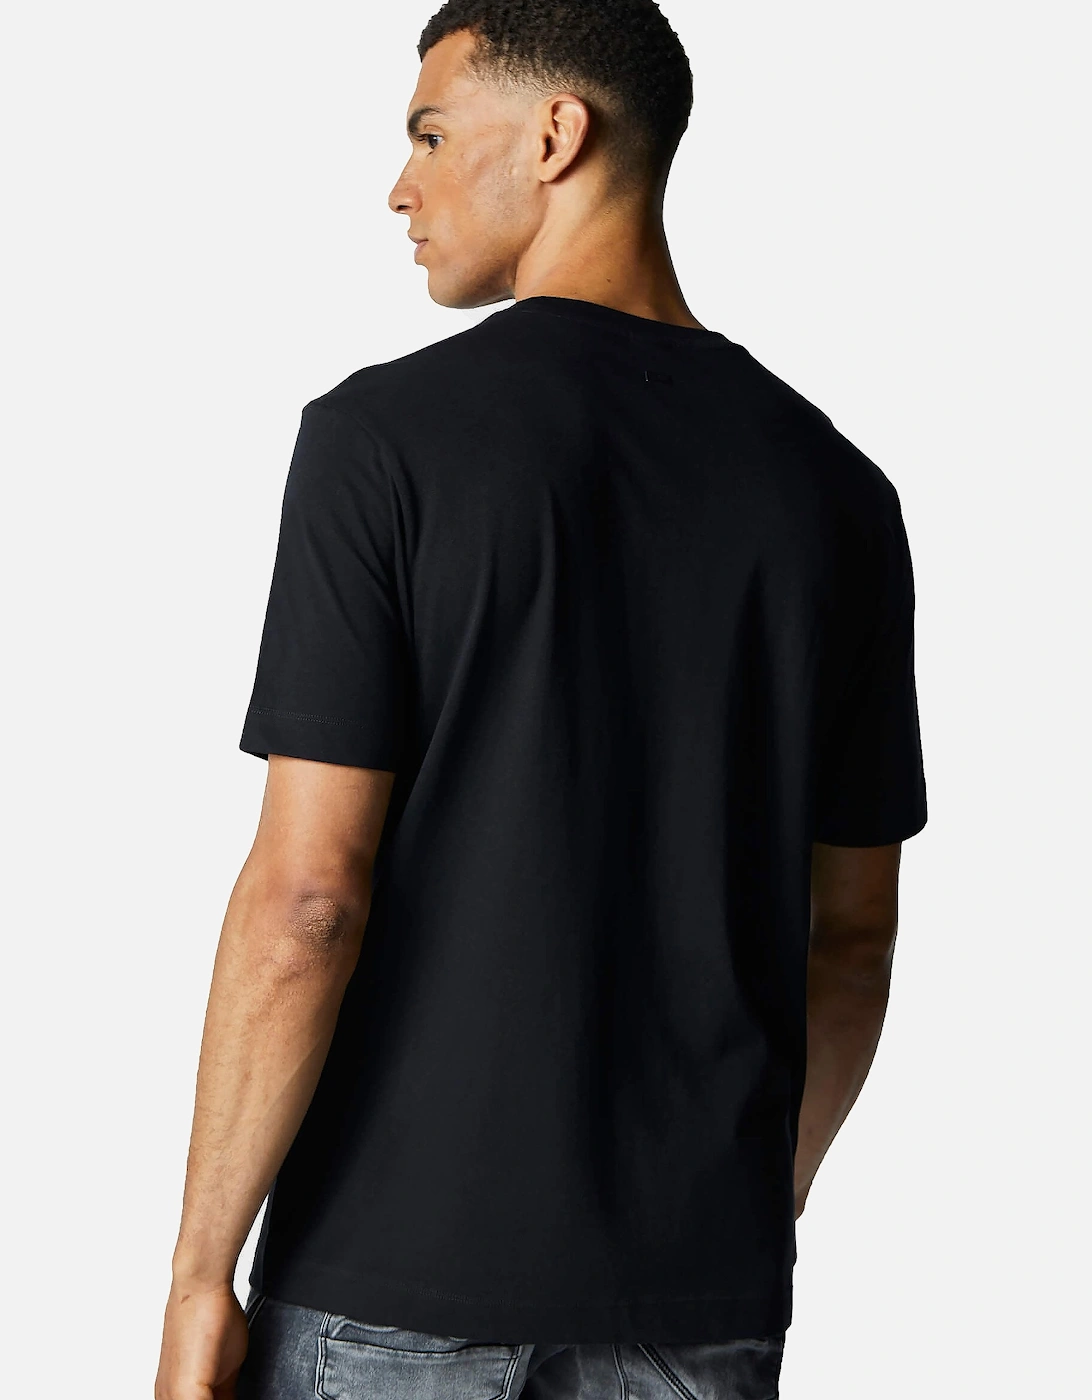 Caen Graphic Print Men's T-Shirt | Black